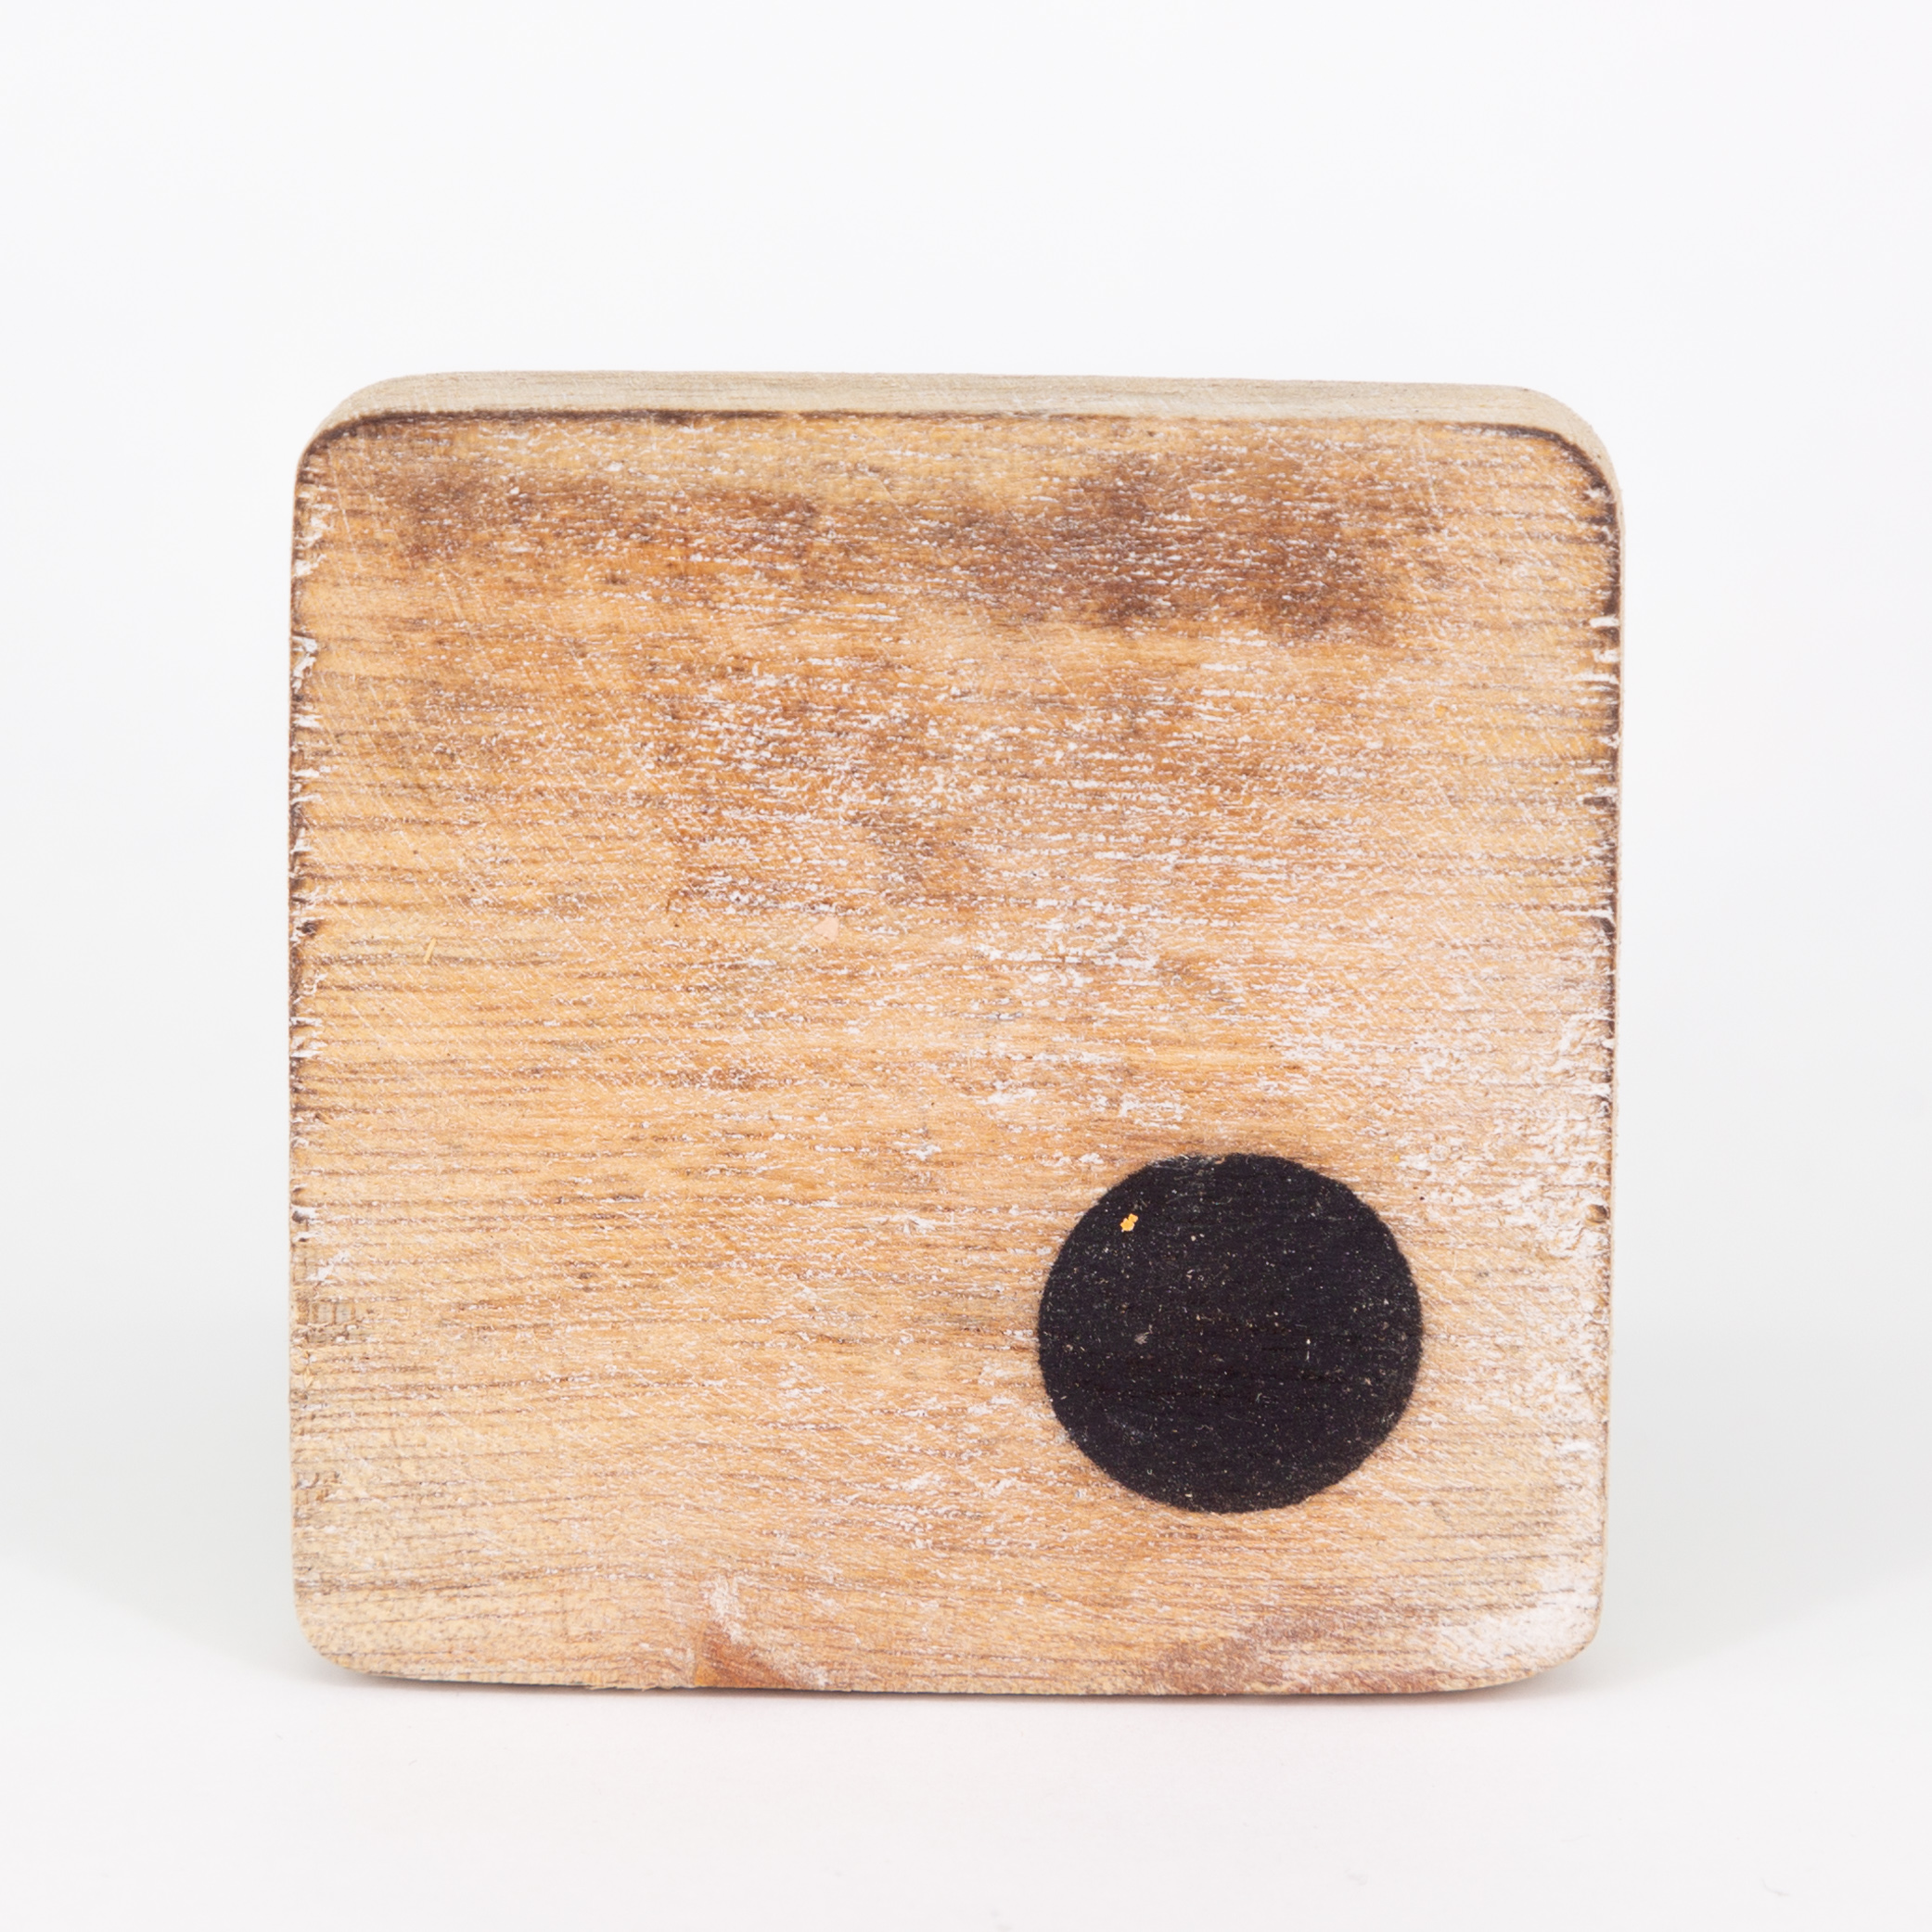 Holzsymbol - Punkt - im Scrabble-Style